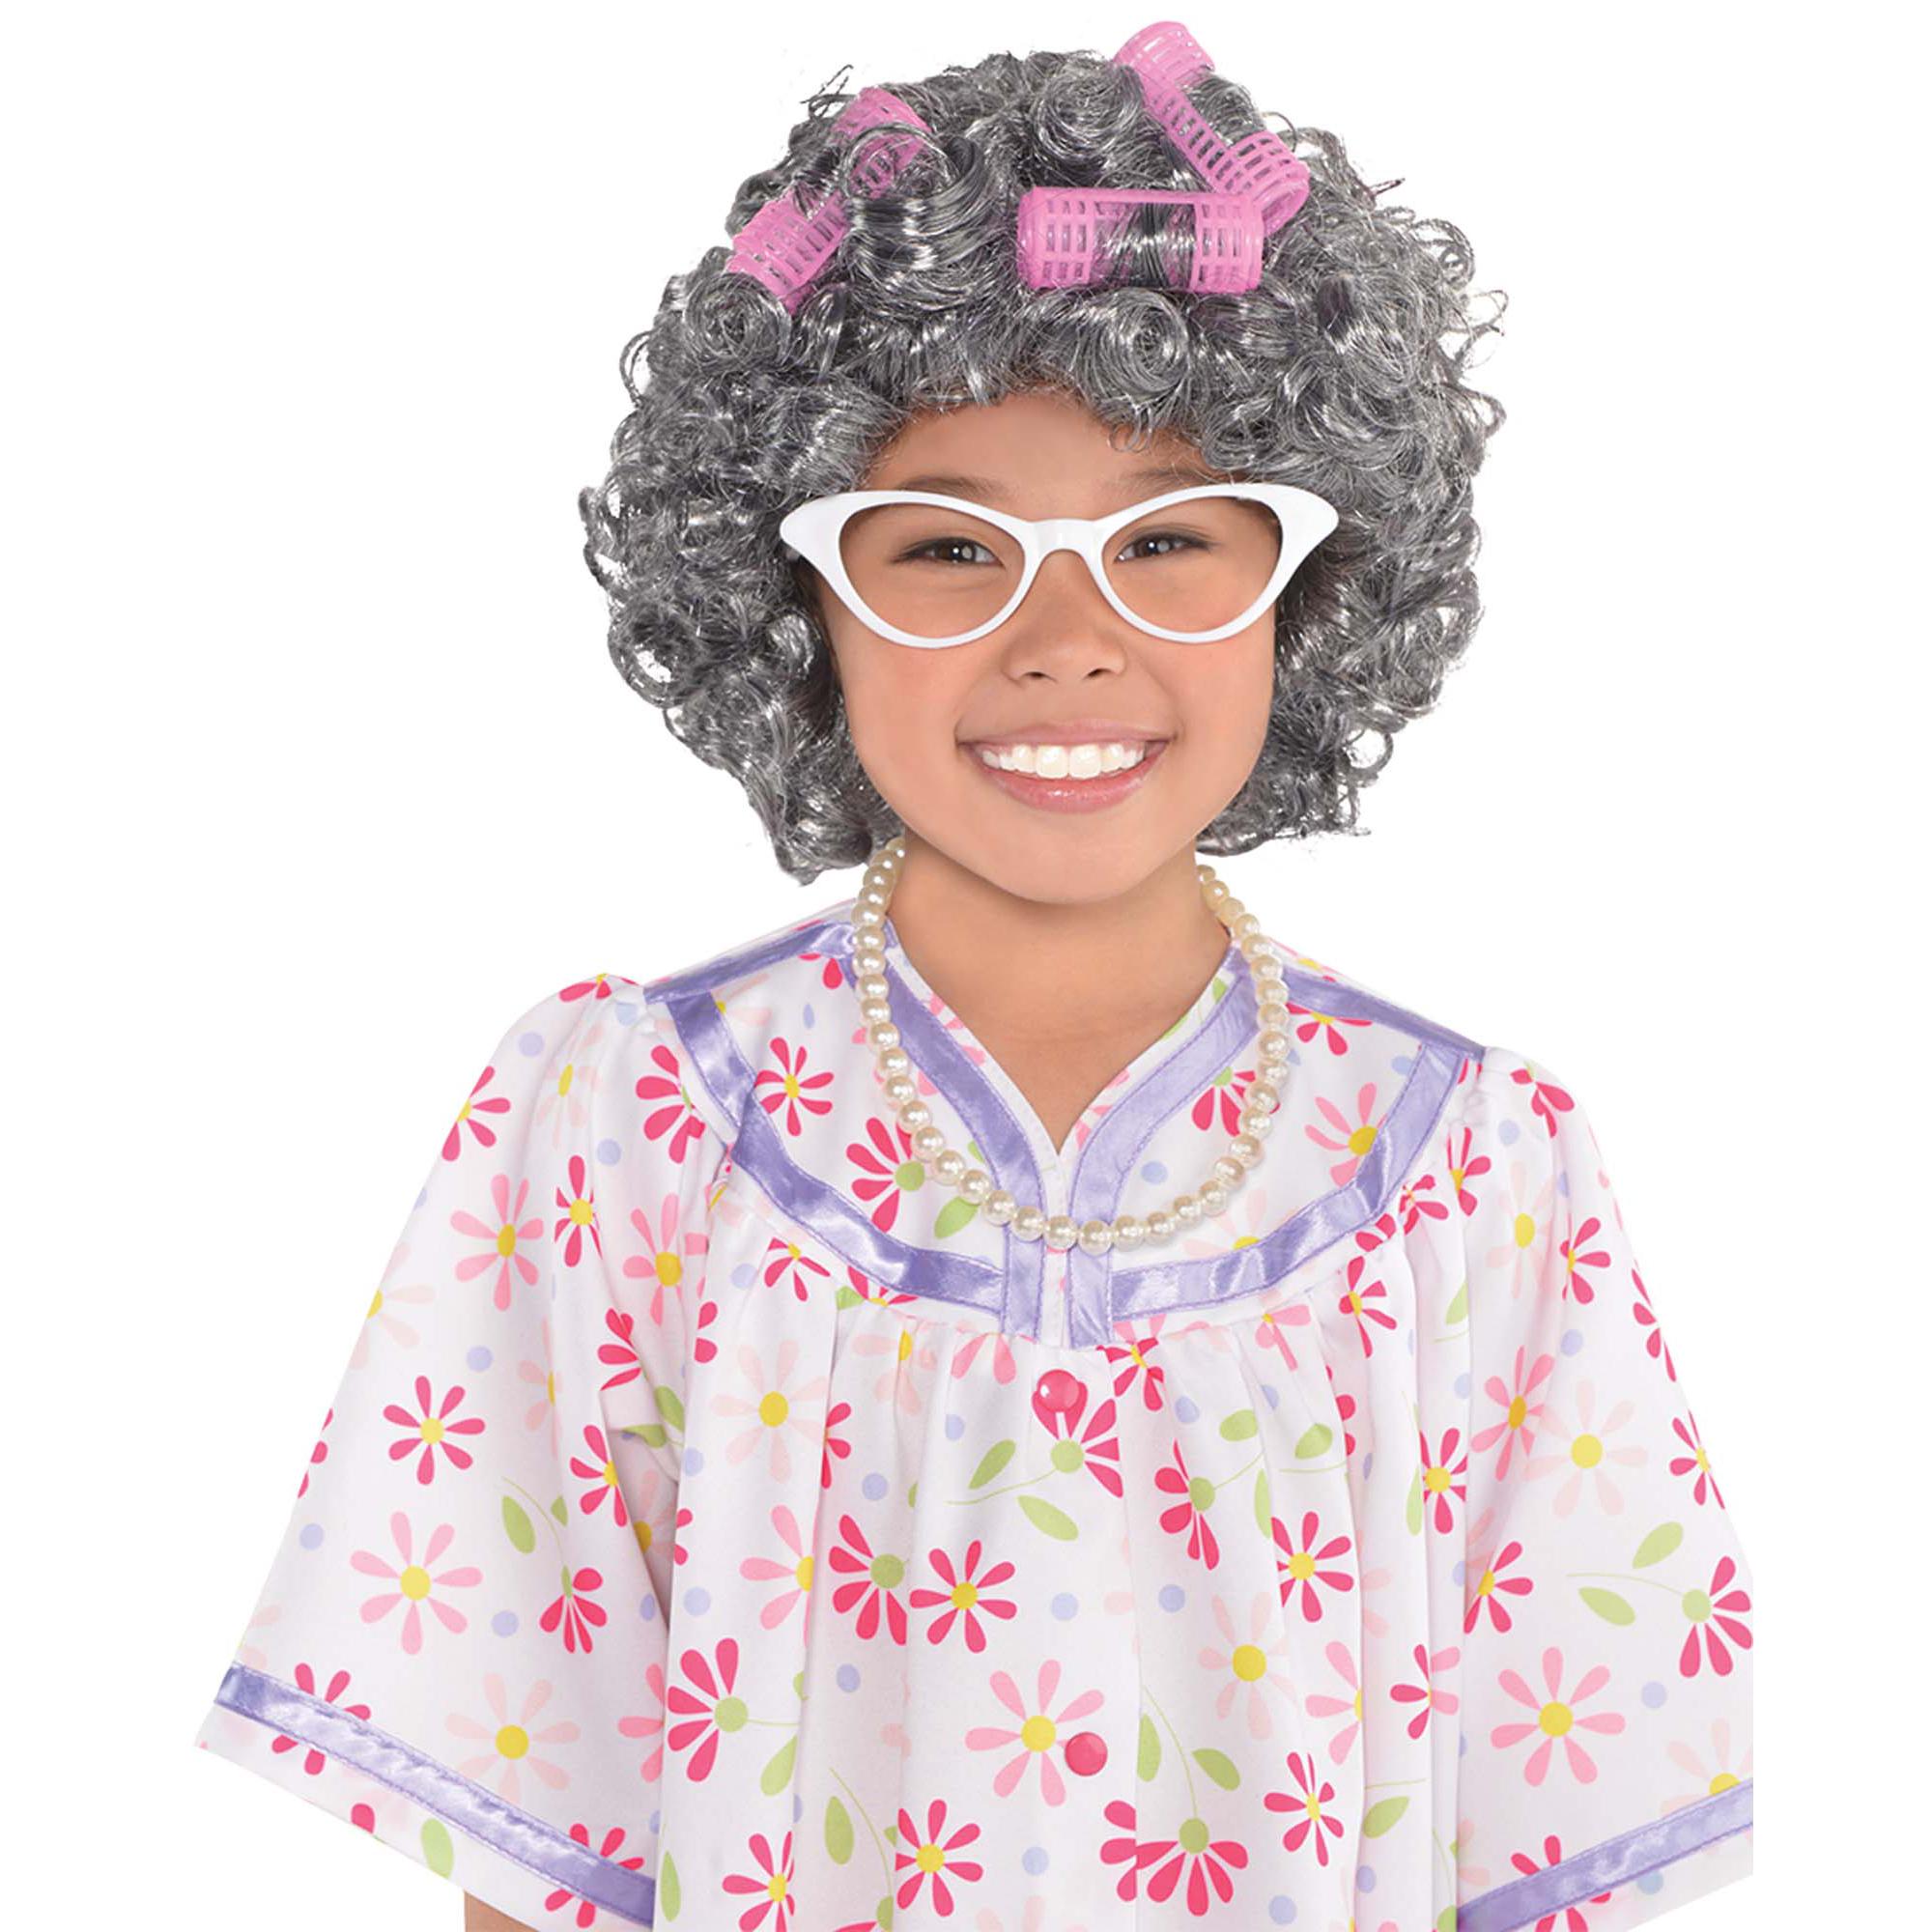 Child Grandma Kit Costumes & Apparel - Party Centre